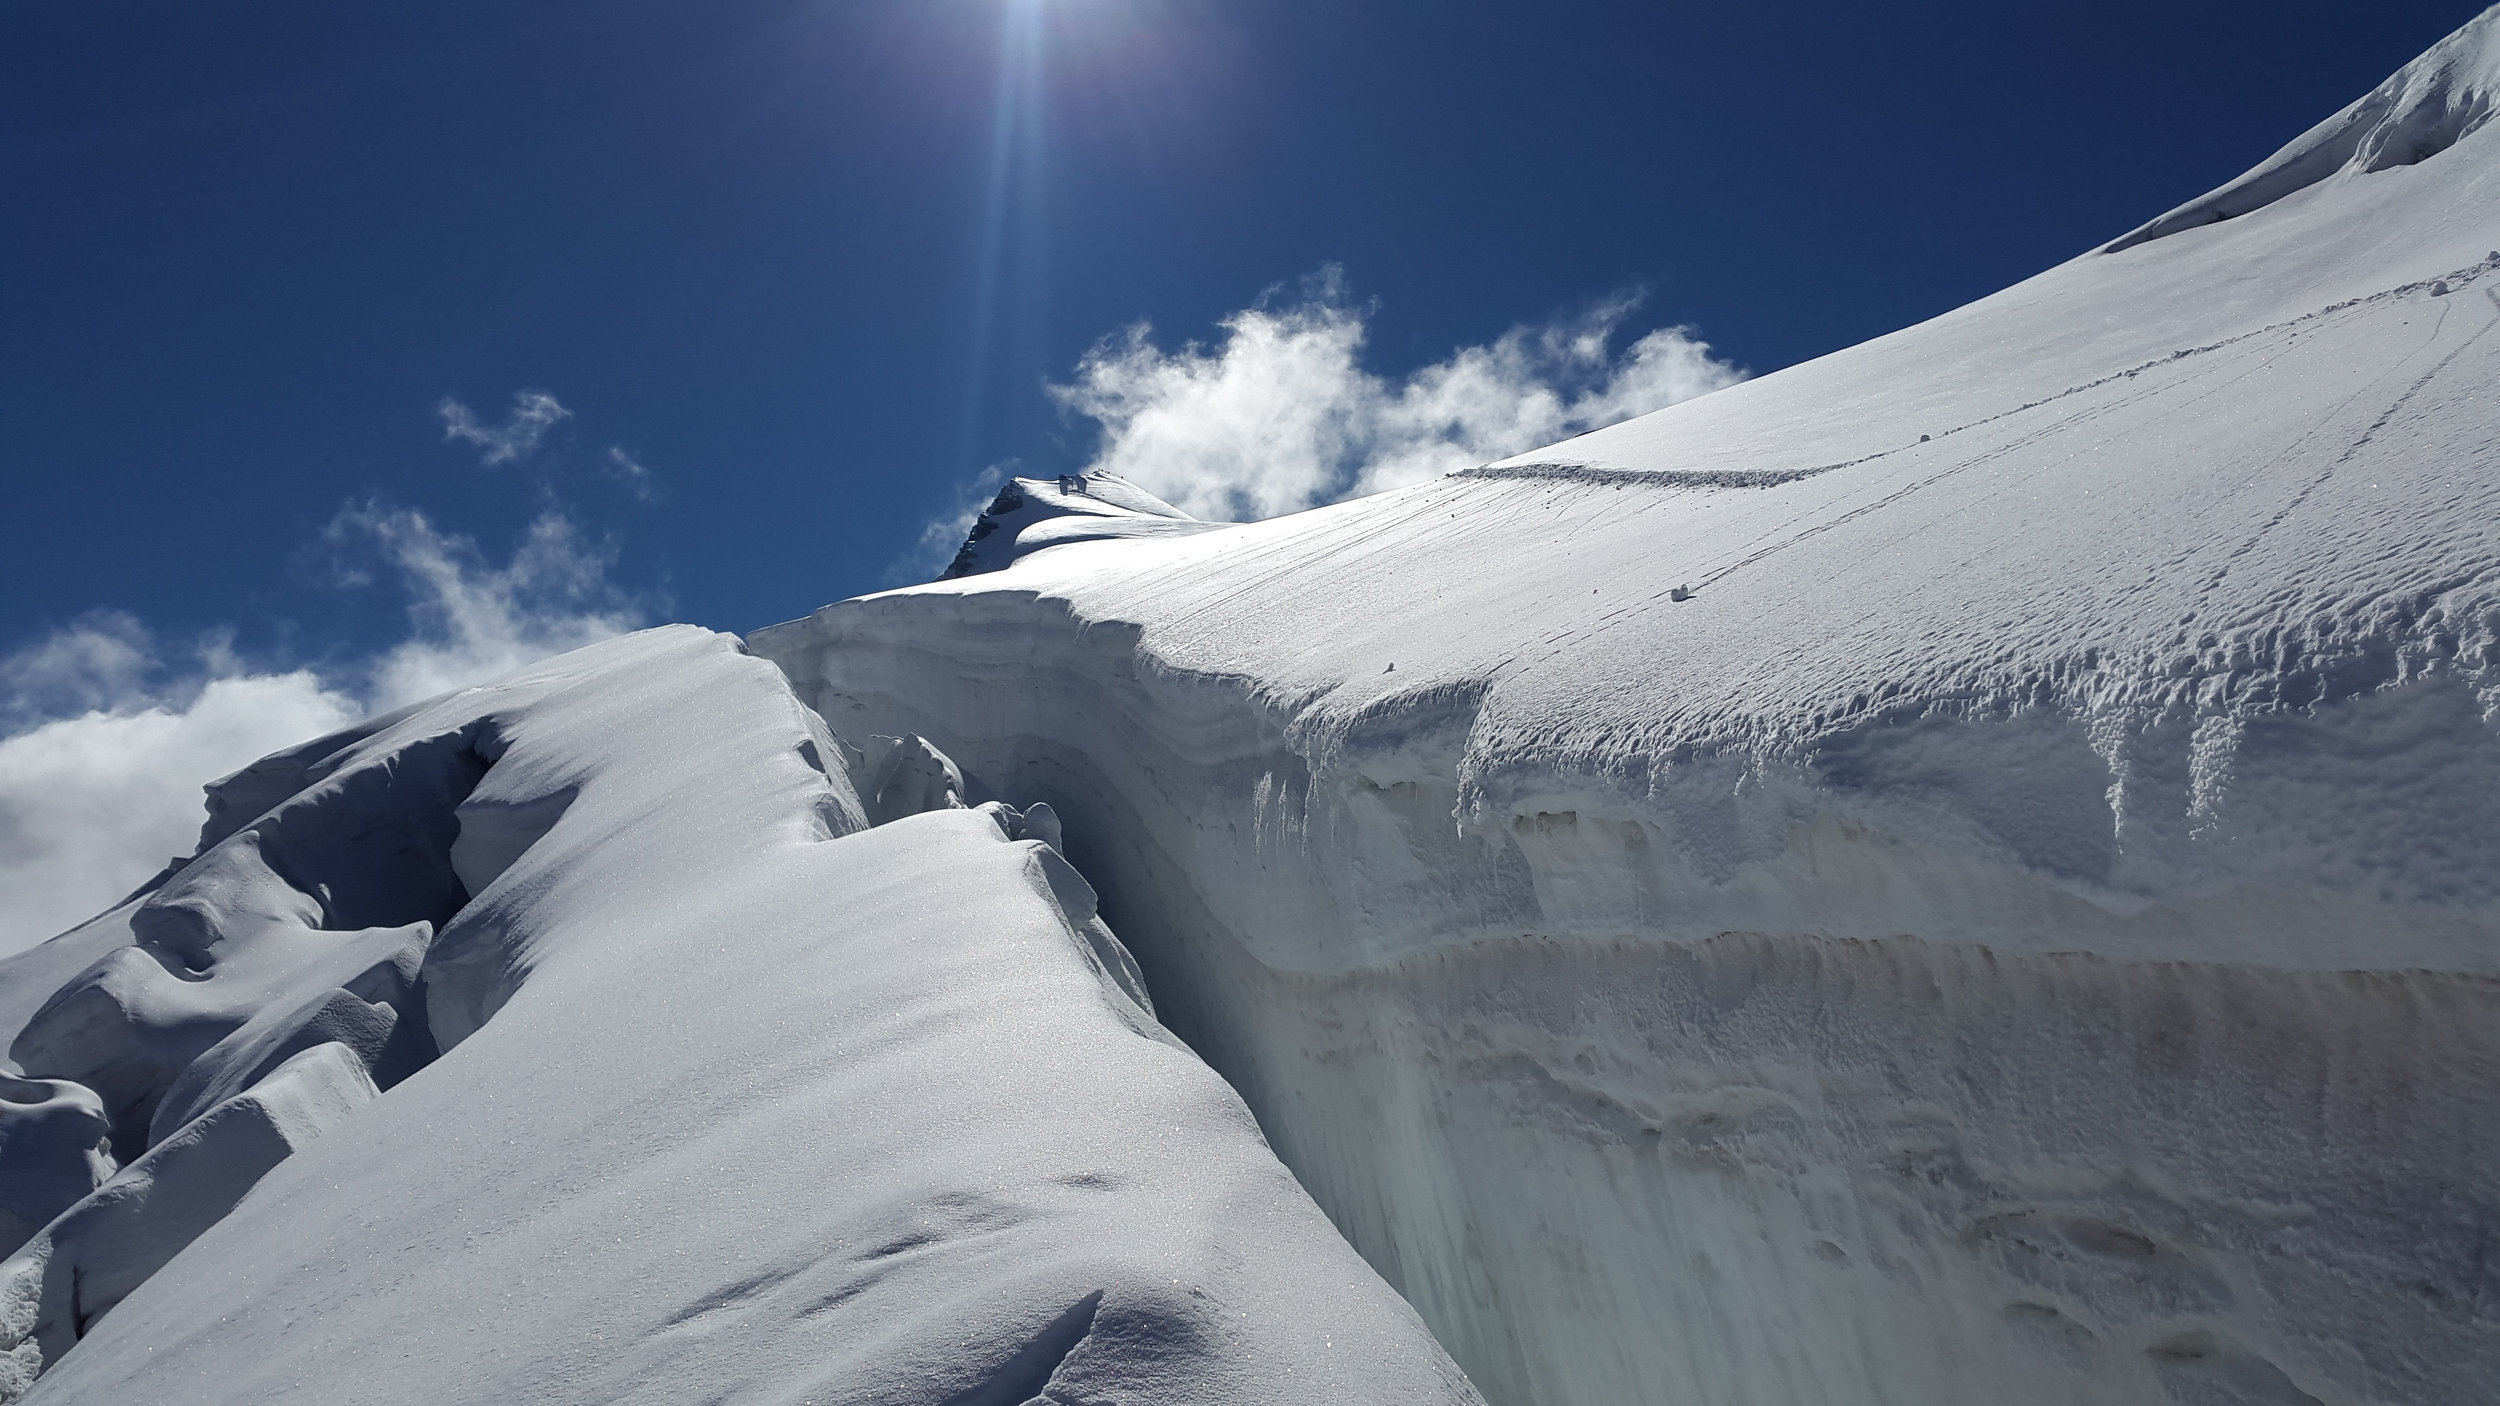 Canva - Snow Field crevase mountain adventure winter sports summit travel ski snowboard by Pixabay.jpg